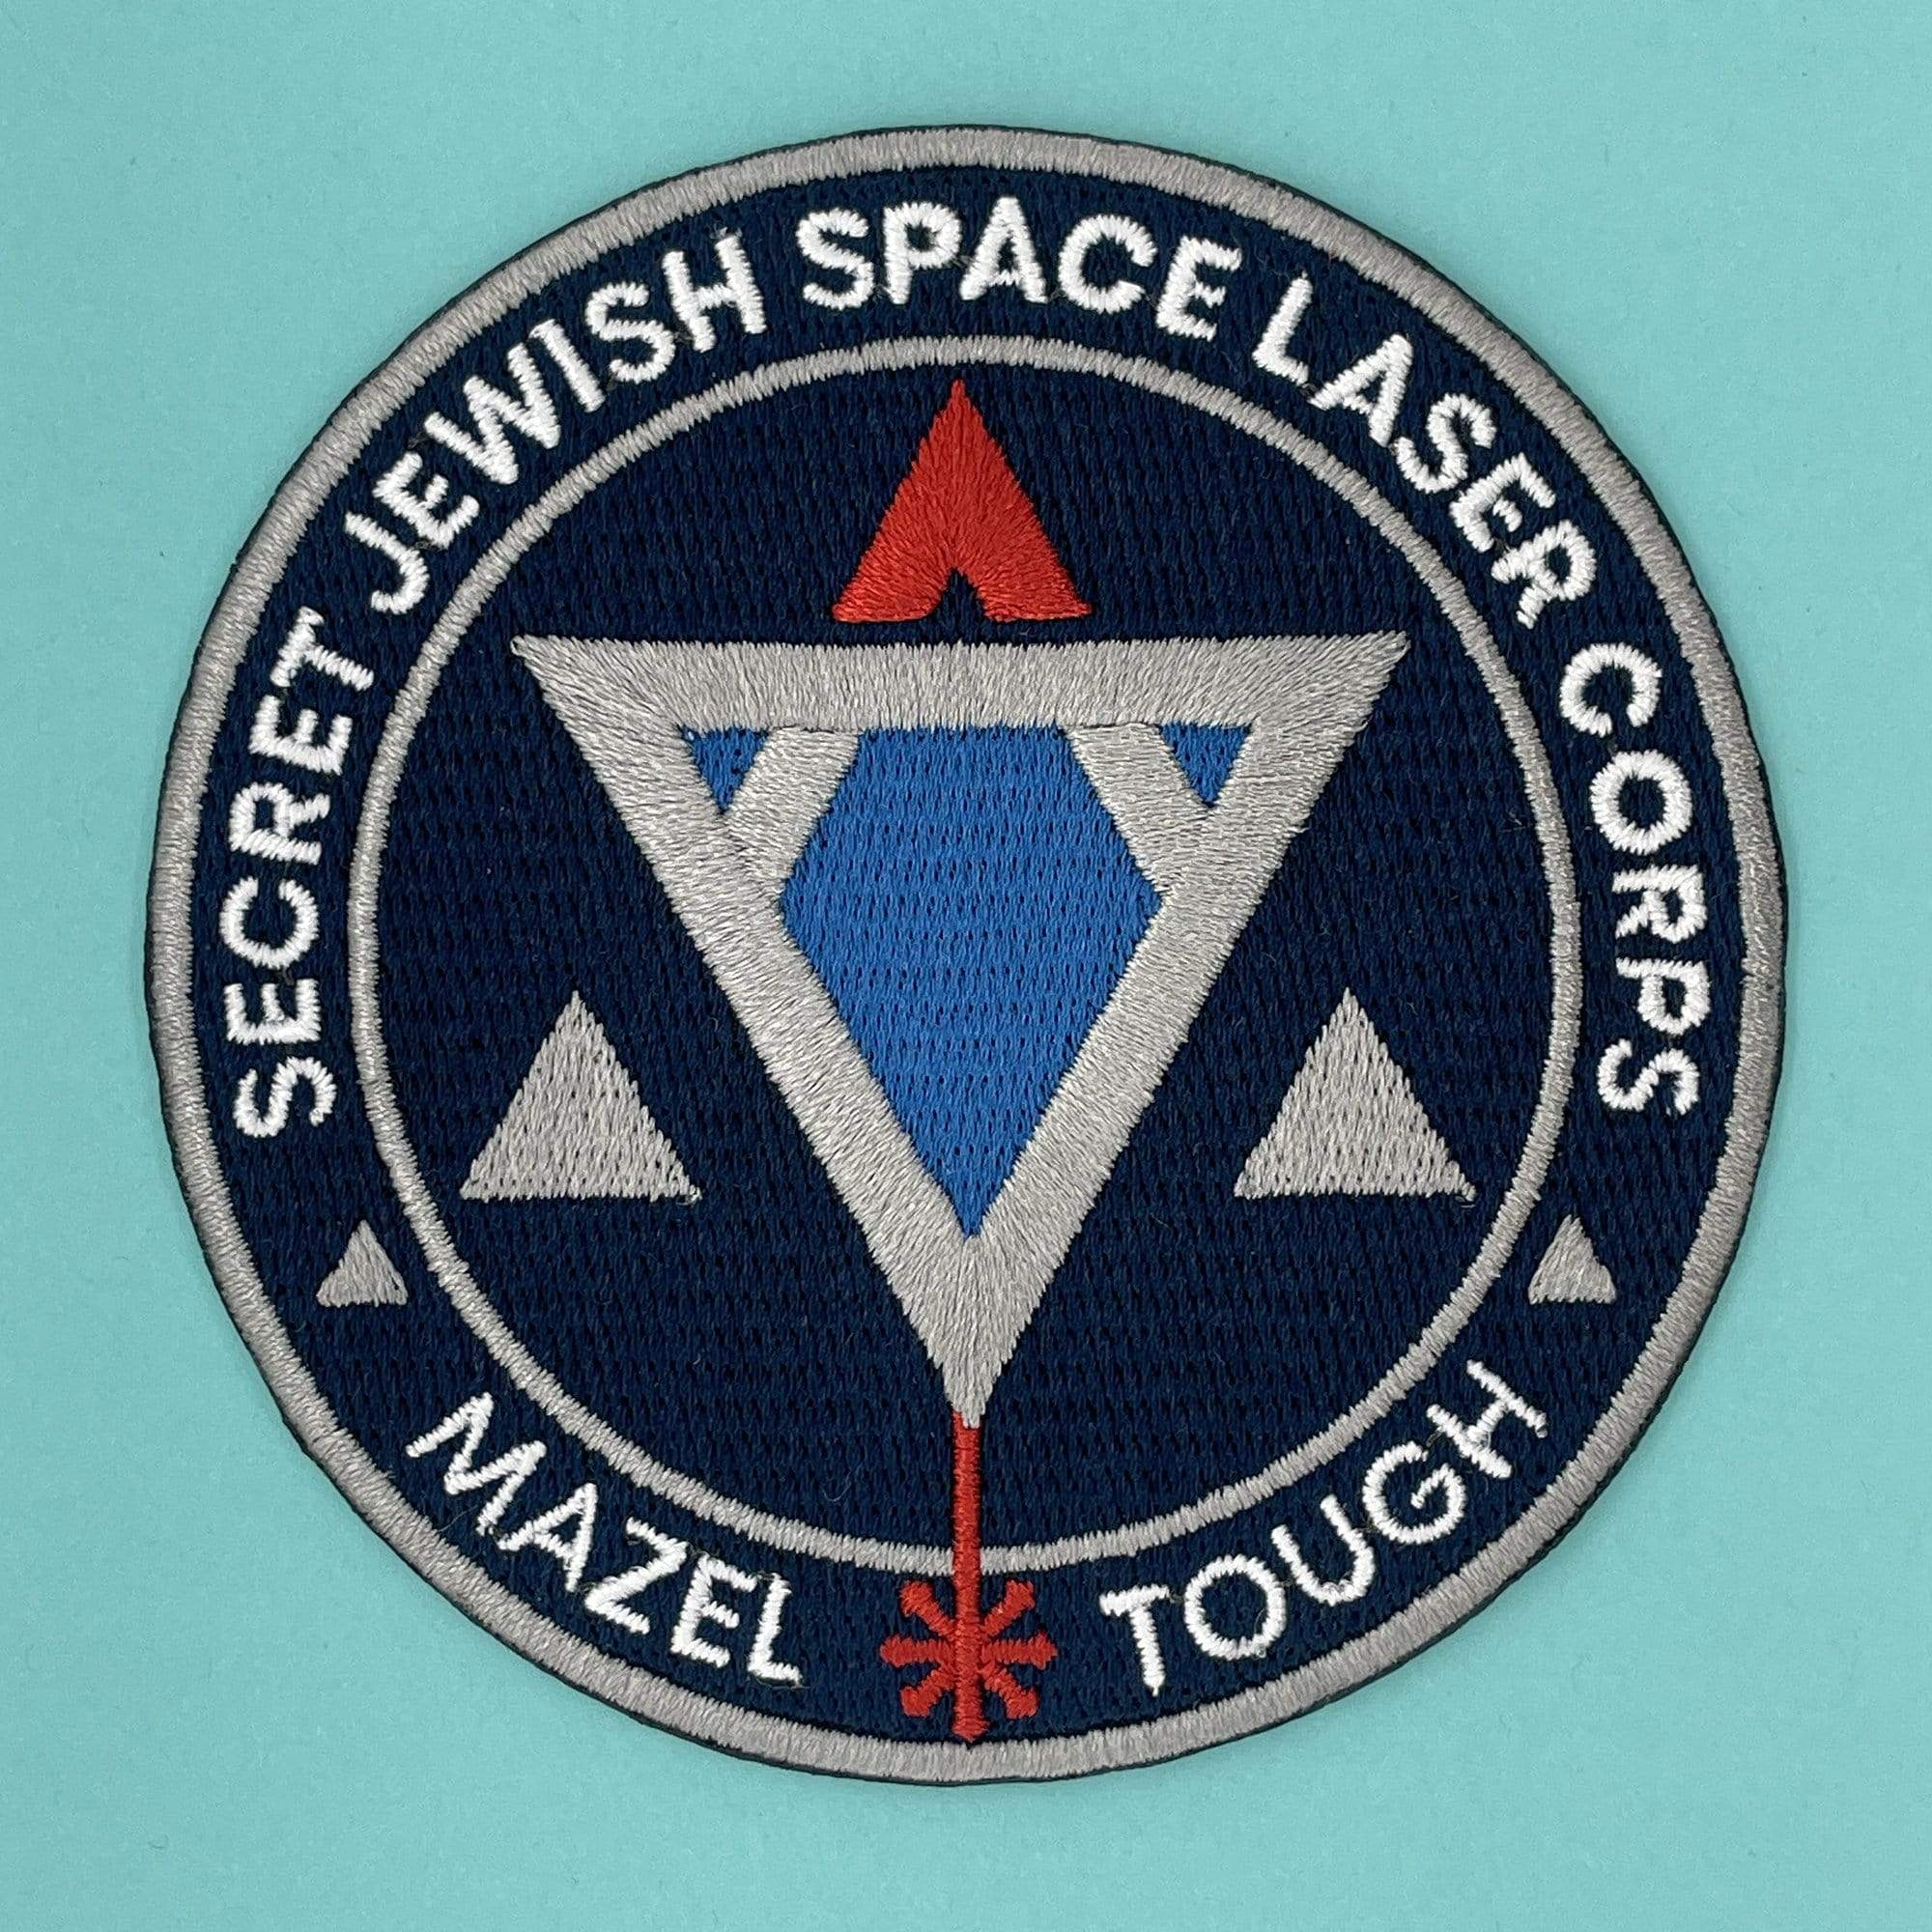 Secret Jewish Space Laser Corps Patch